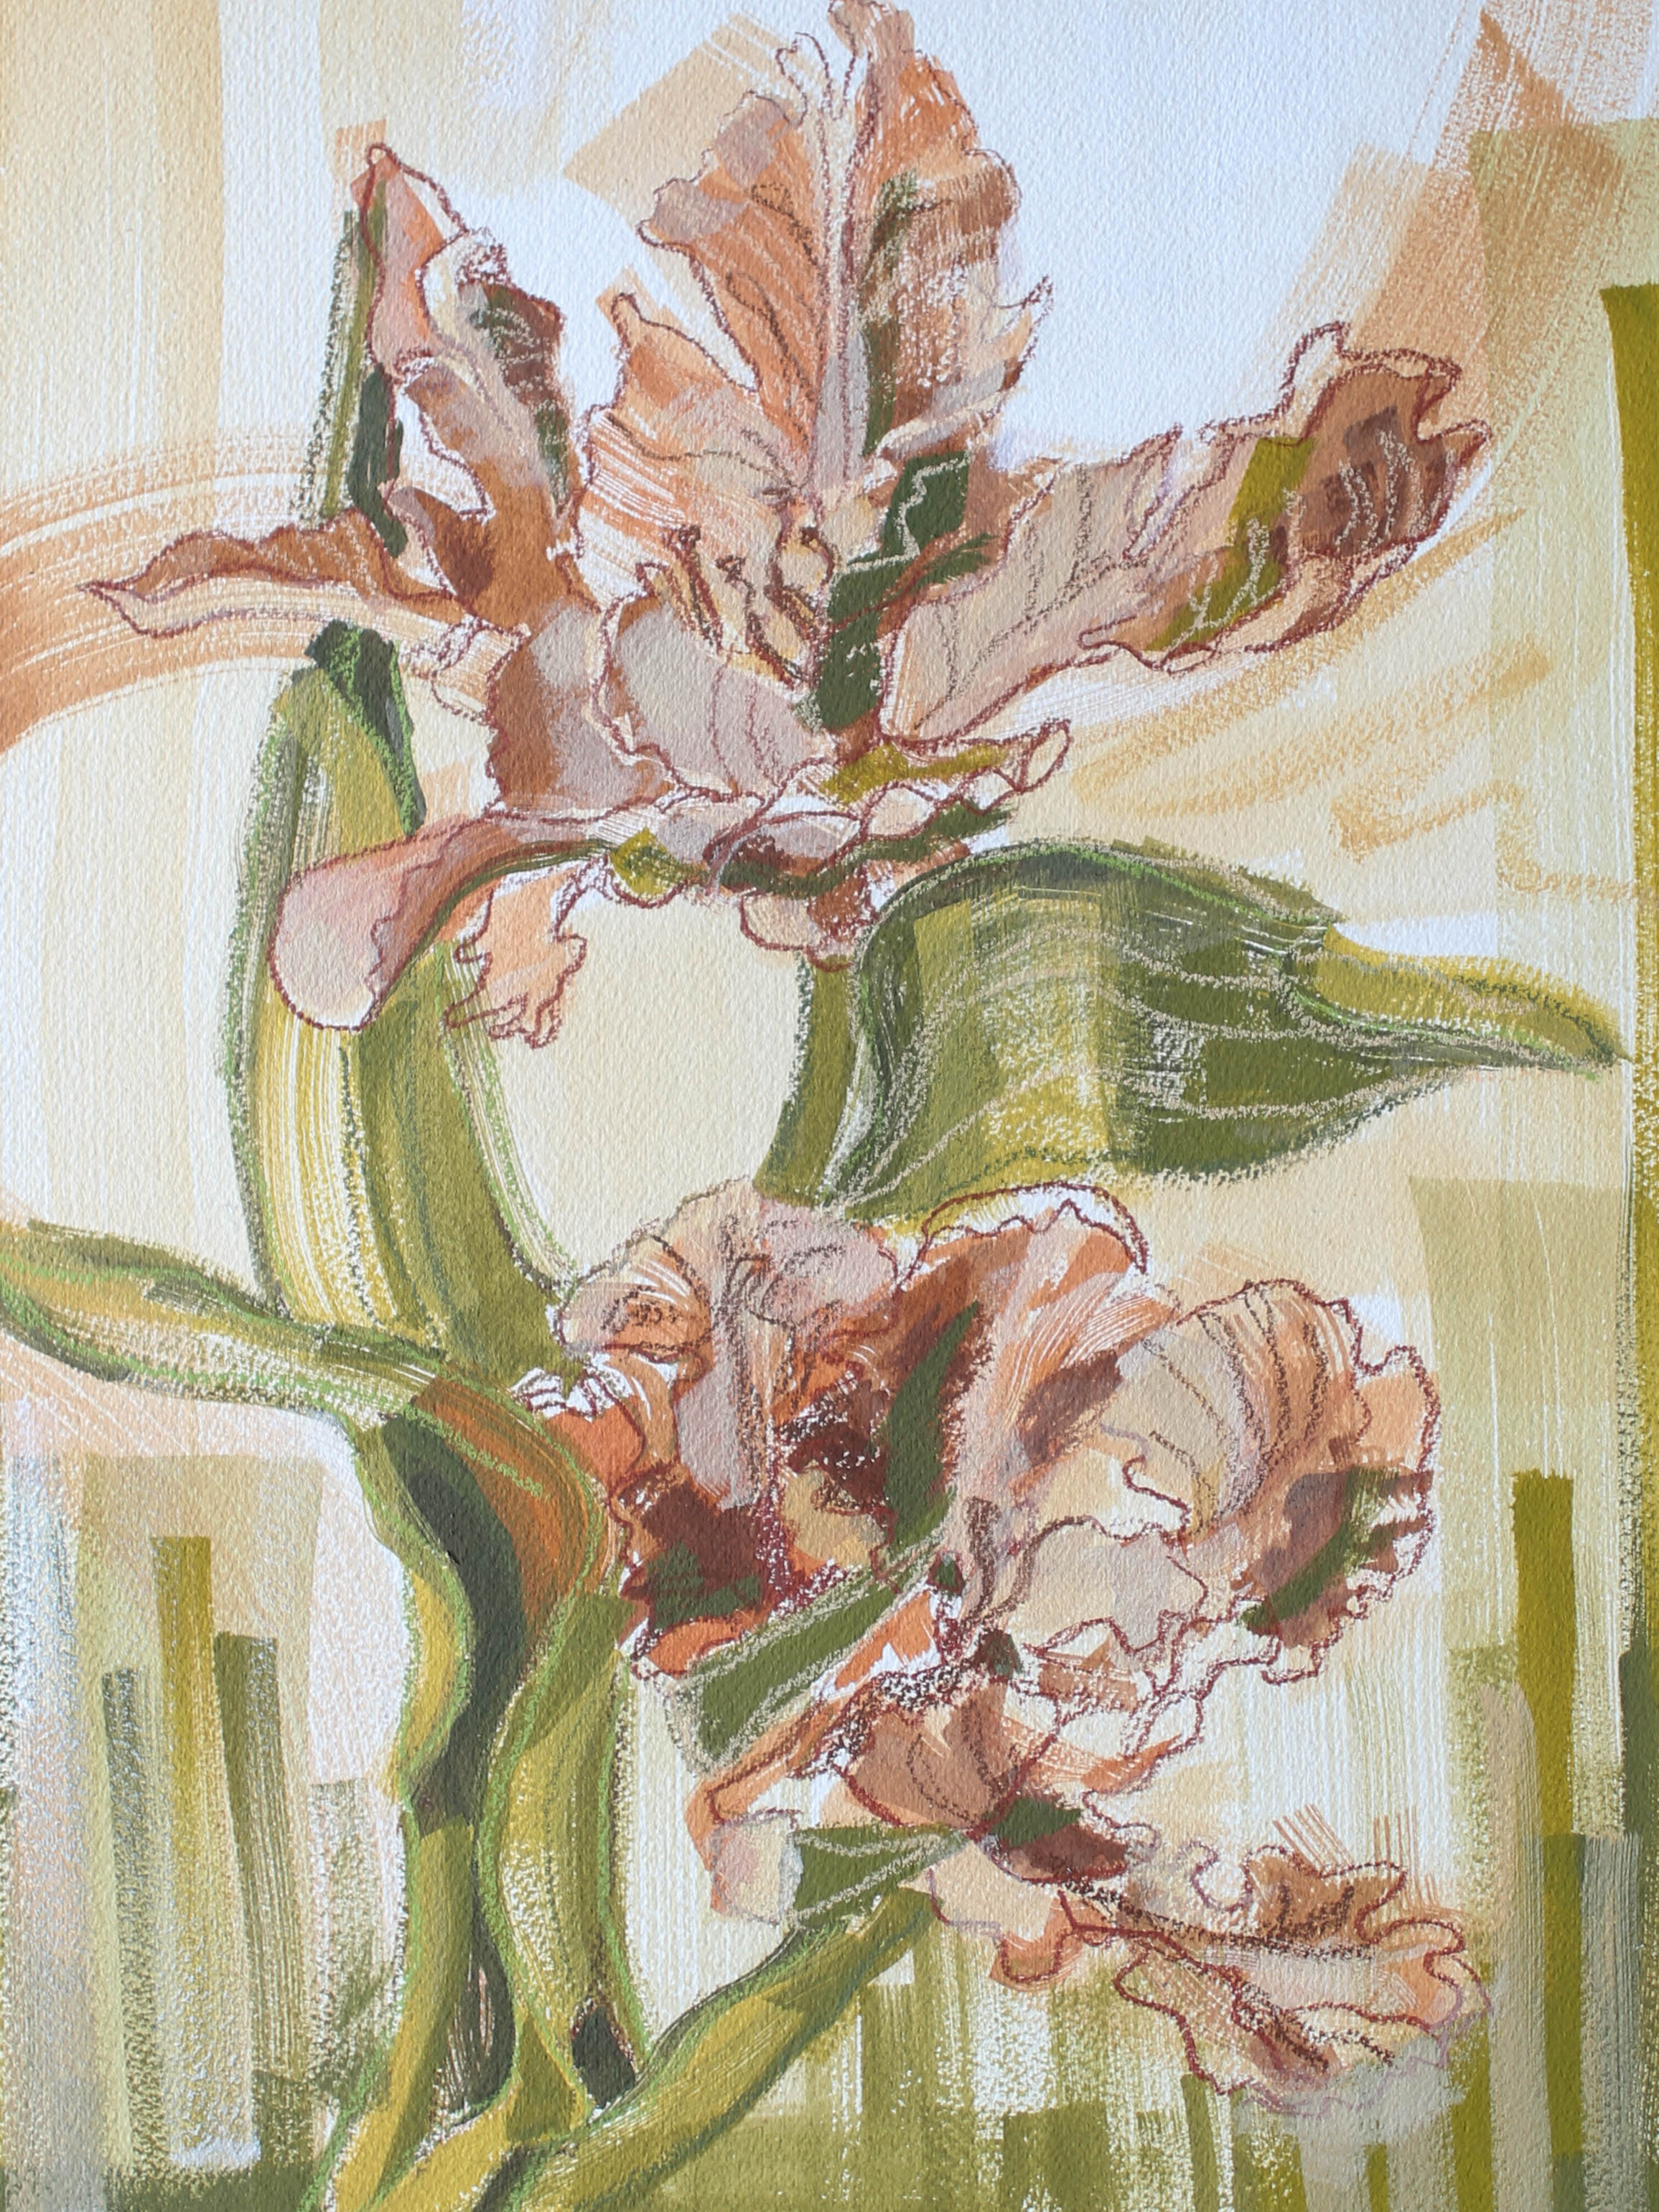 FLOWERS FOR THE MOTHER 12X16 Katherine Corden Art  #abstractflorals #flowerpainting #flowerstudy